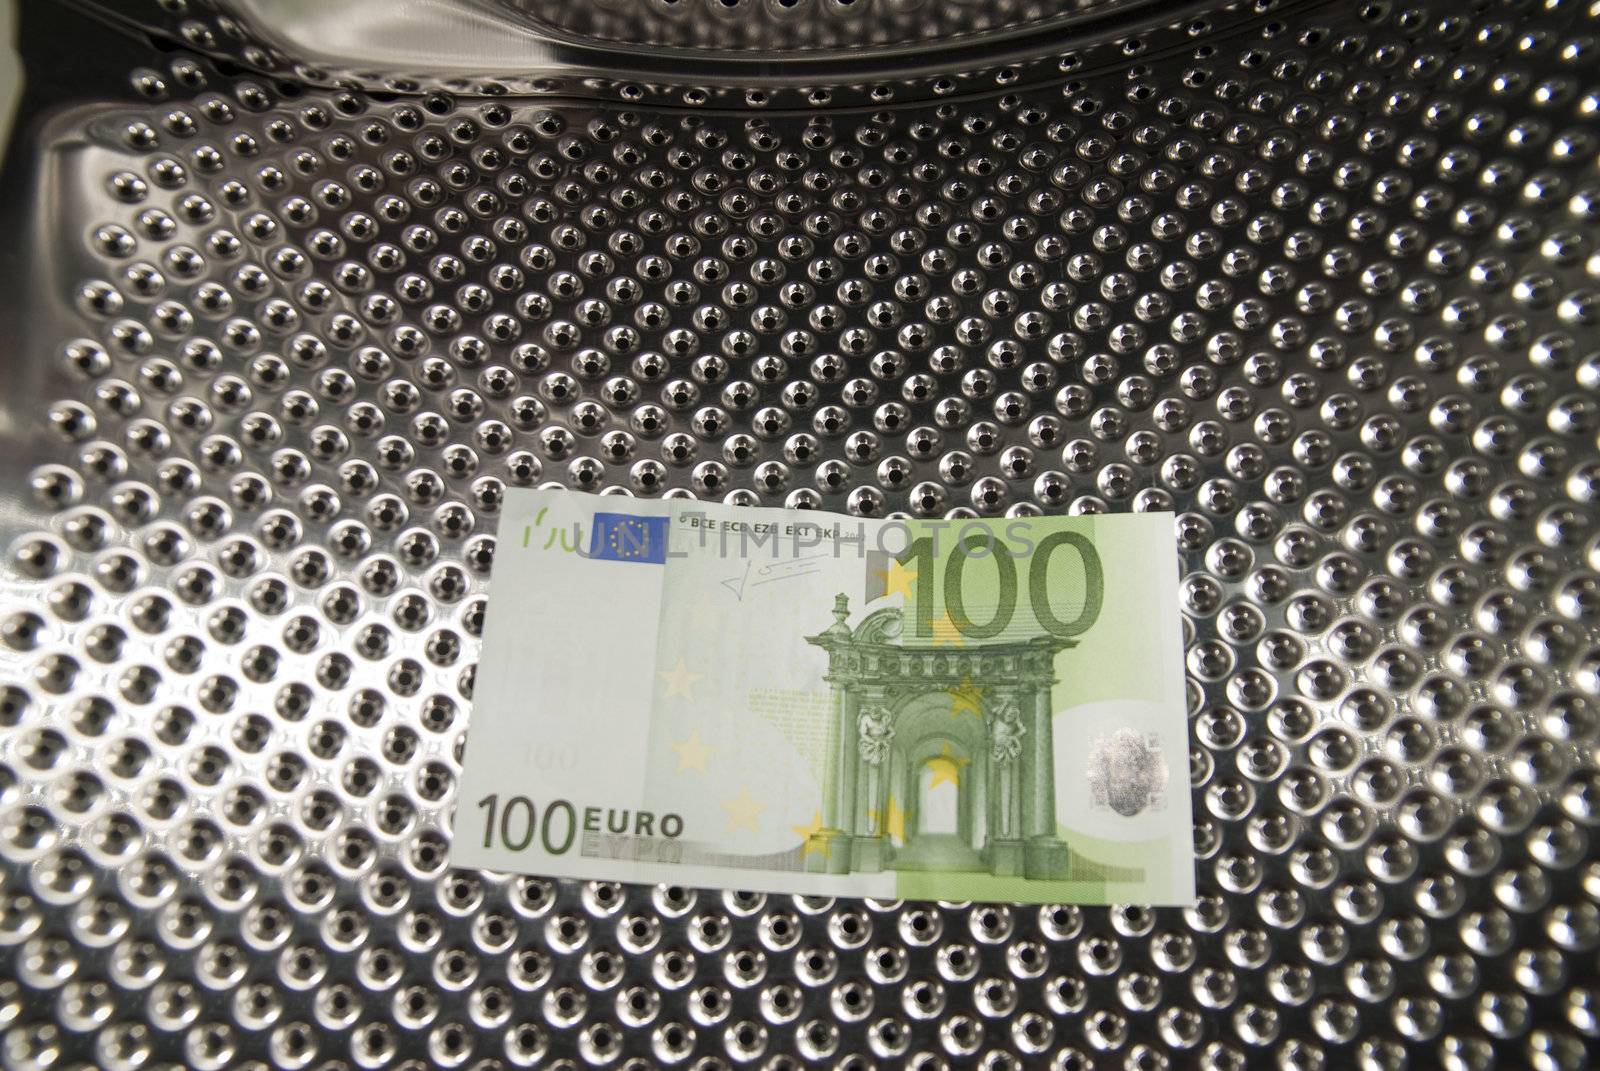 Euro bills in the lattice drumhead,of Washing Machine.